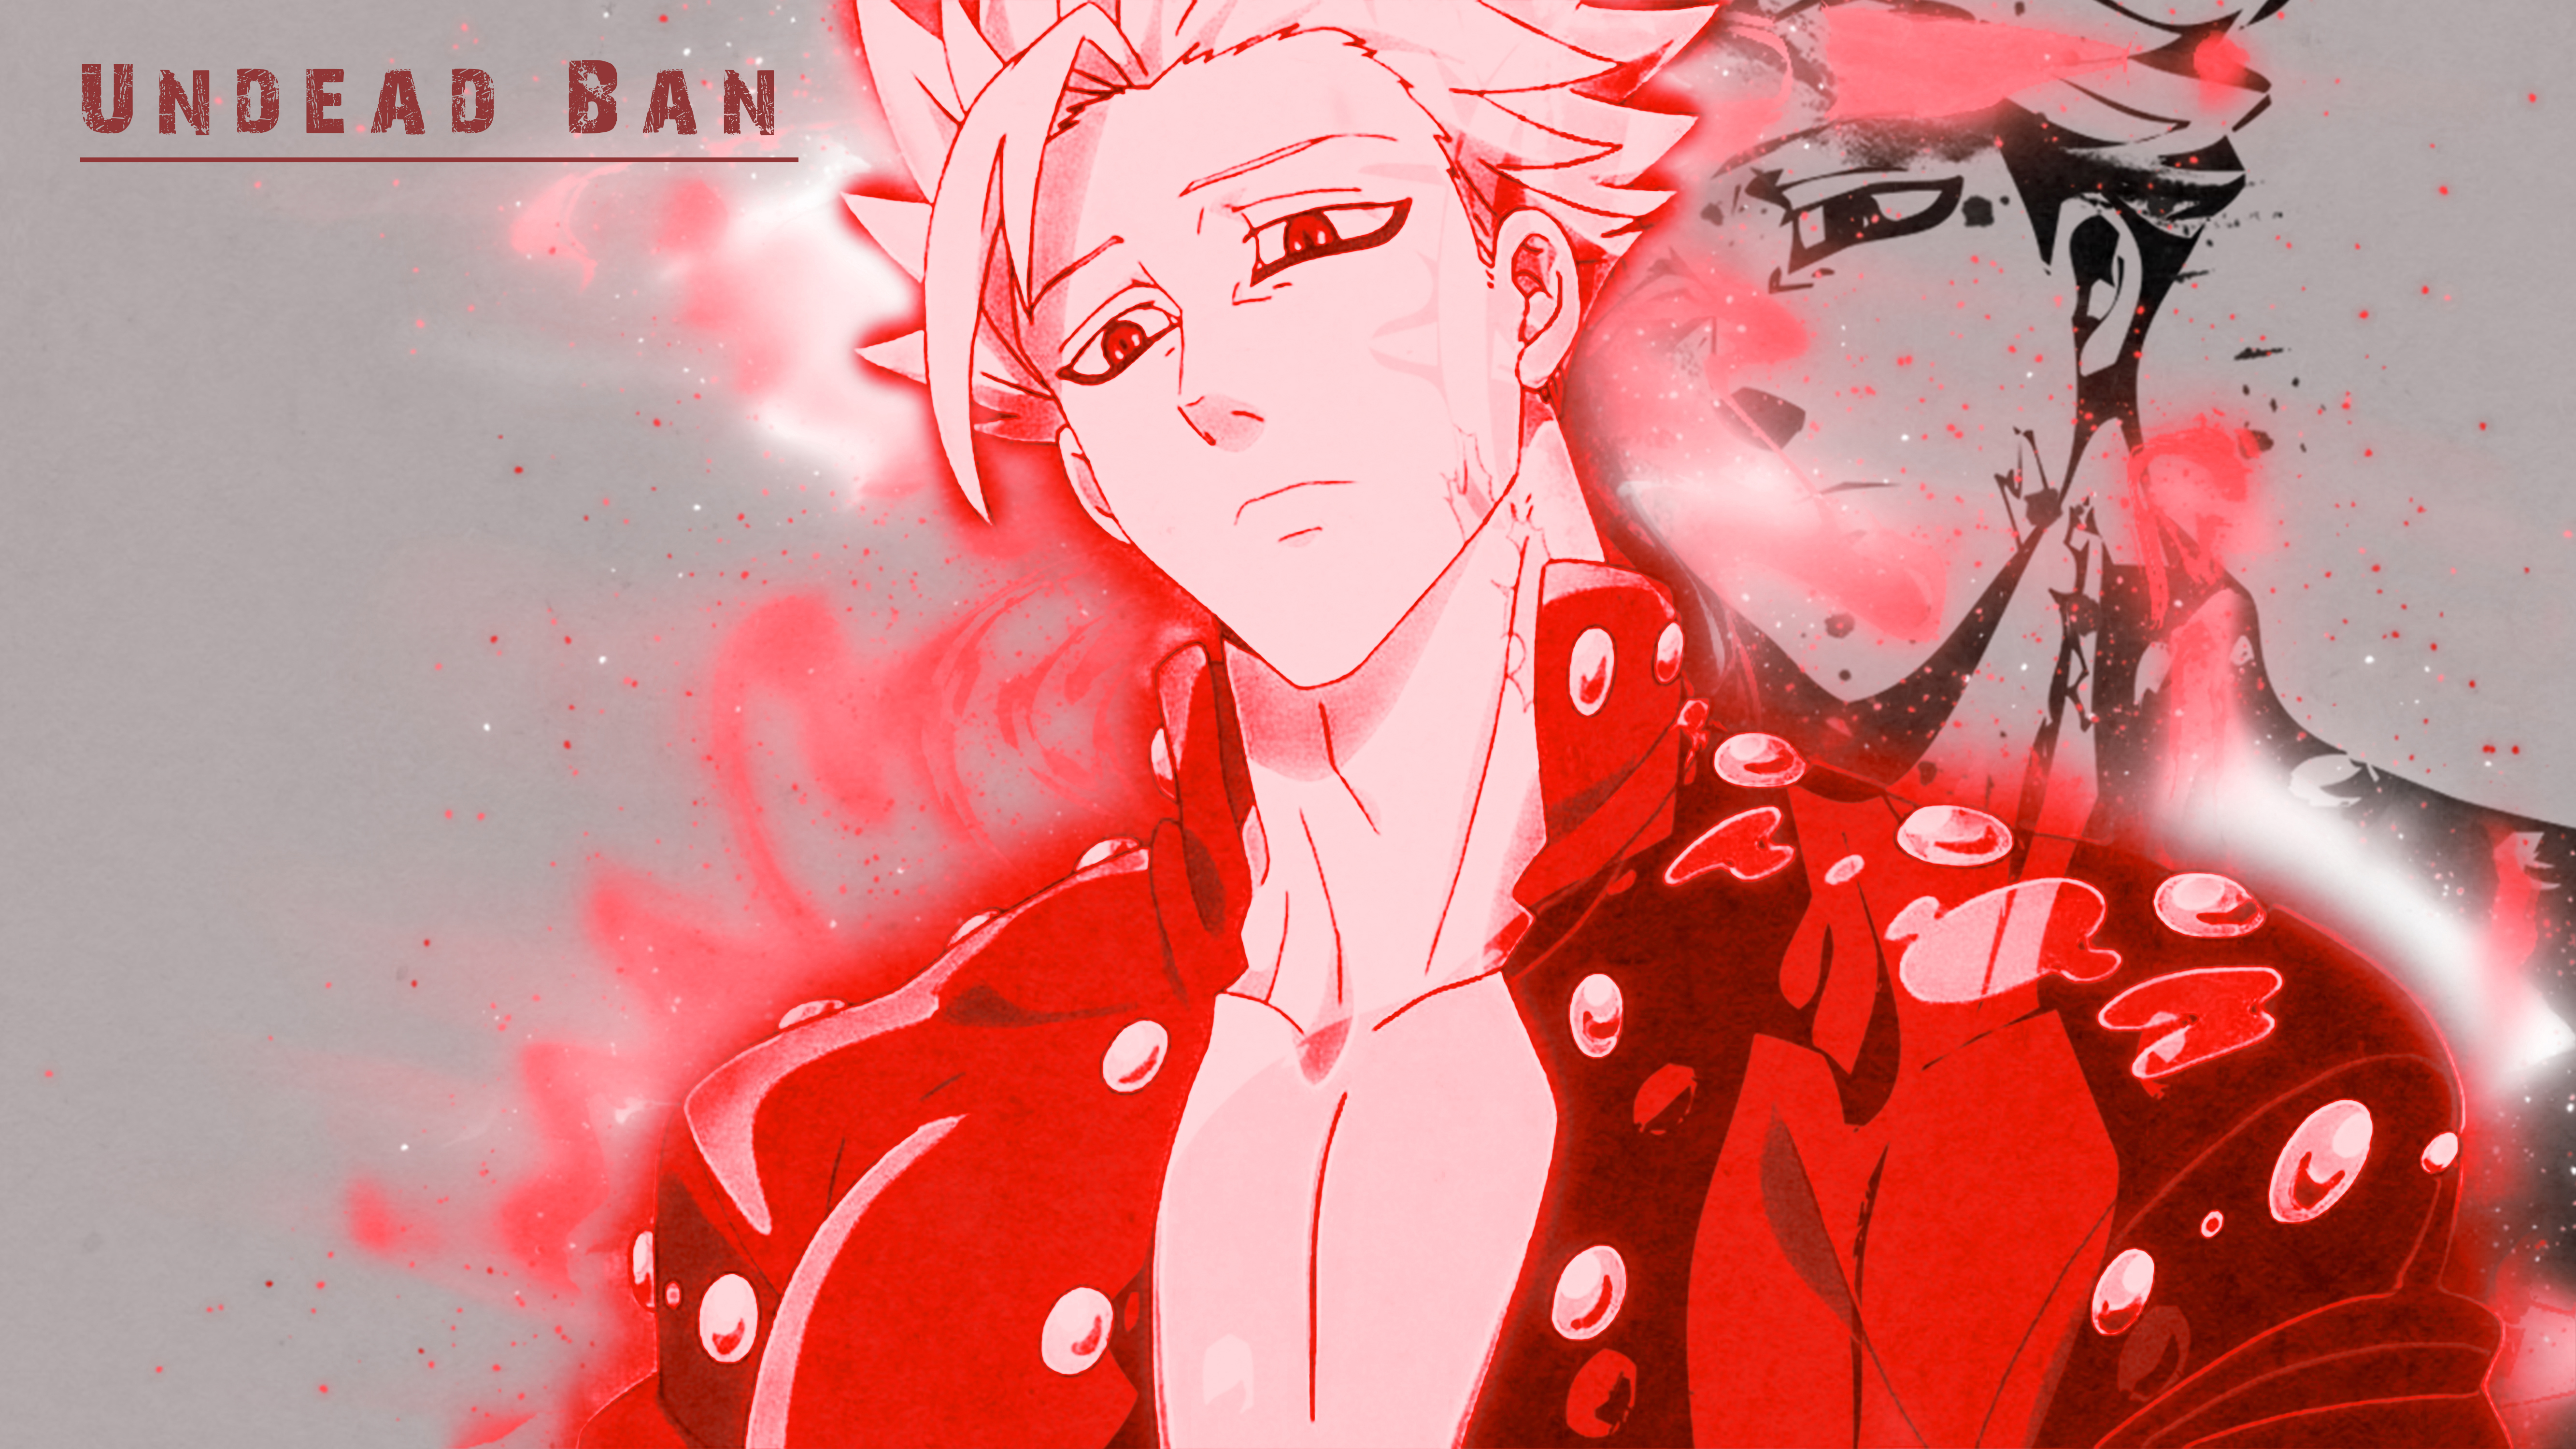 ban wallpaper,red,anime,cartoon,illustration,fictional character